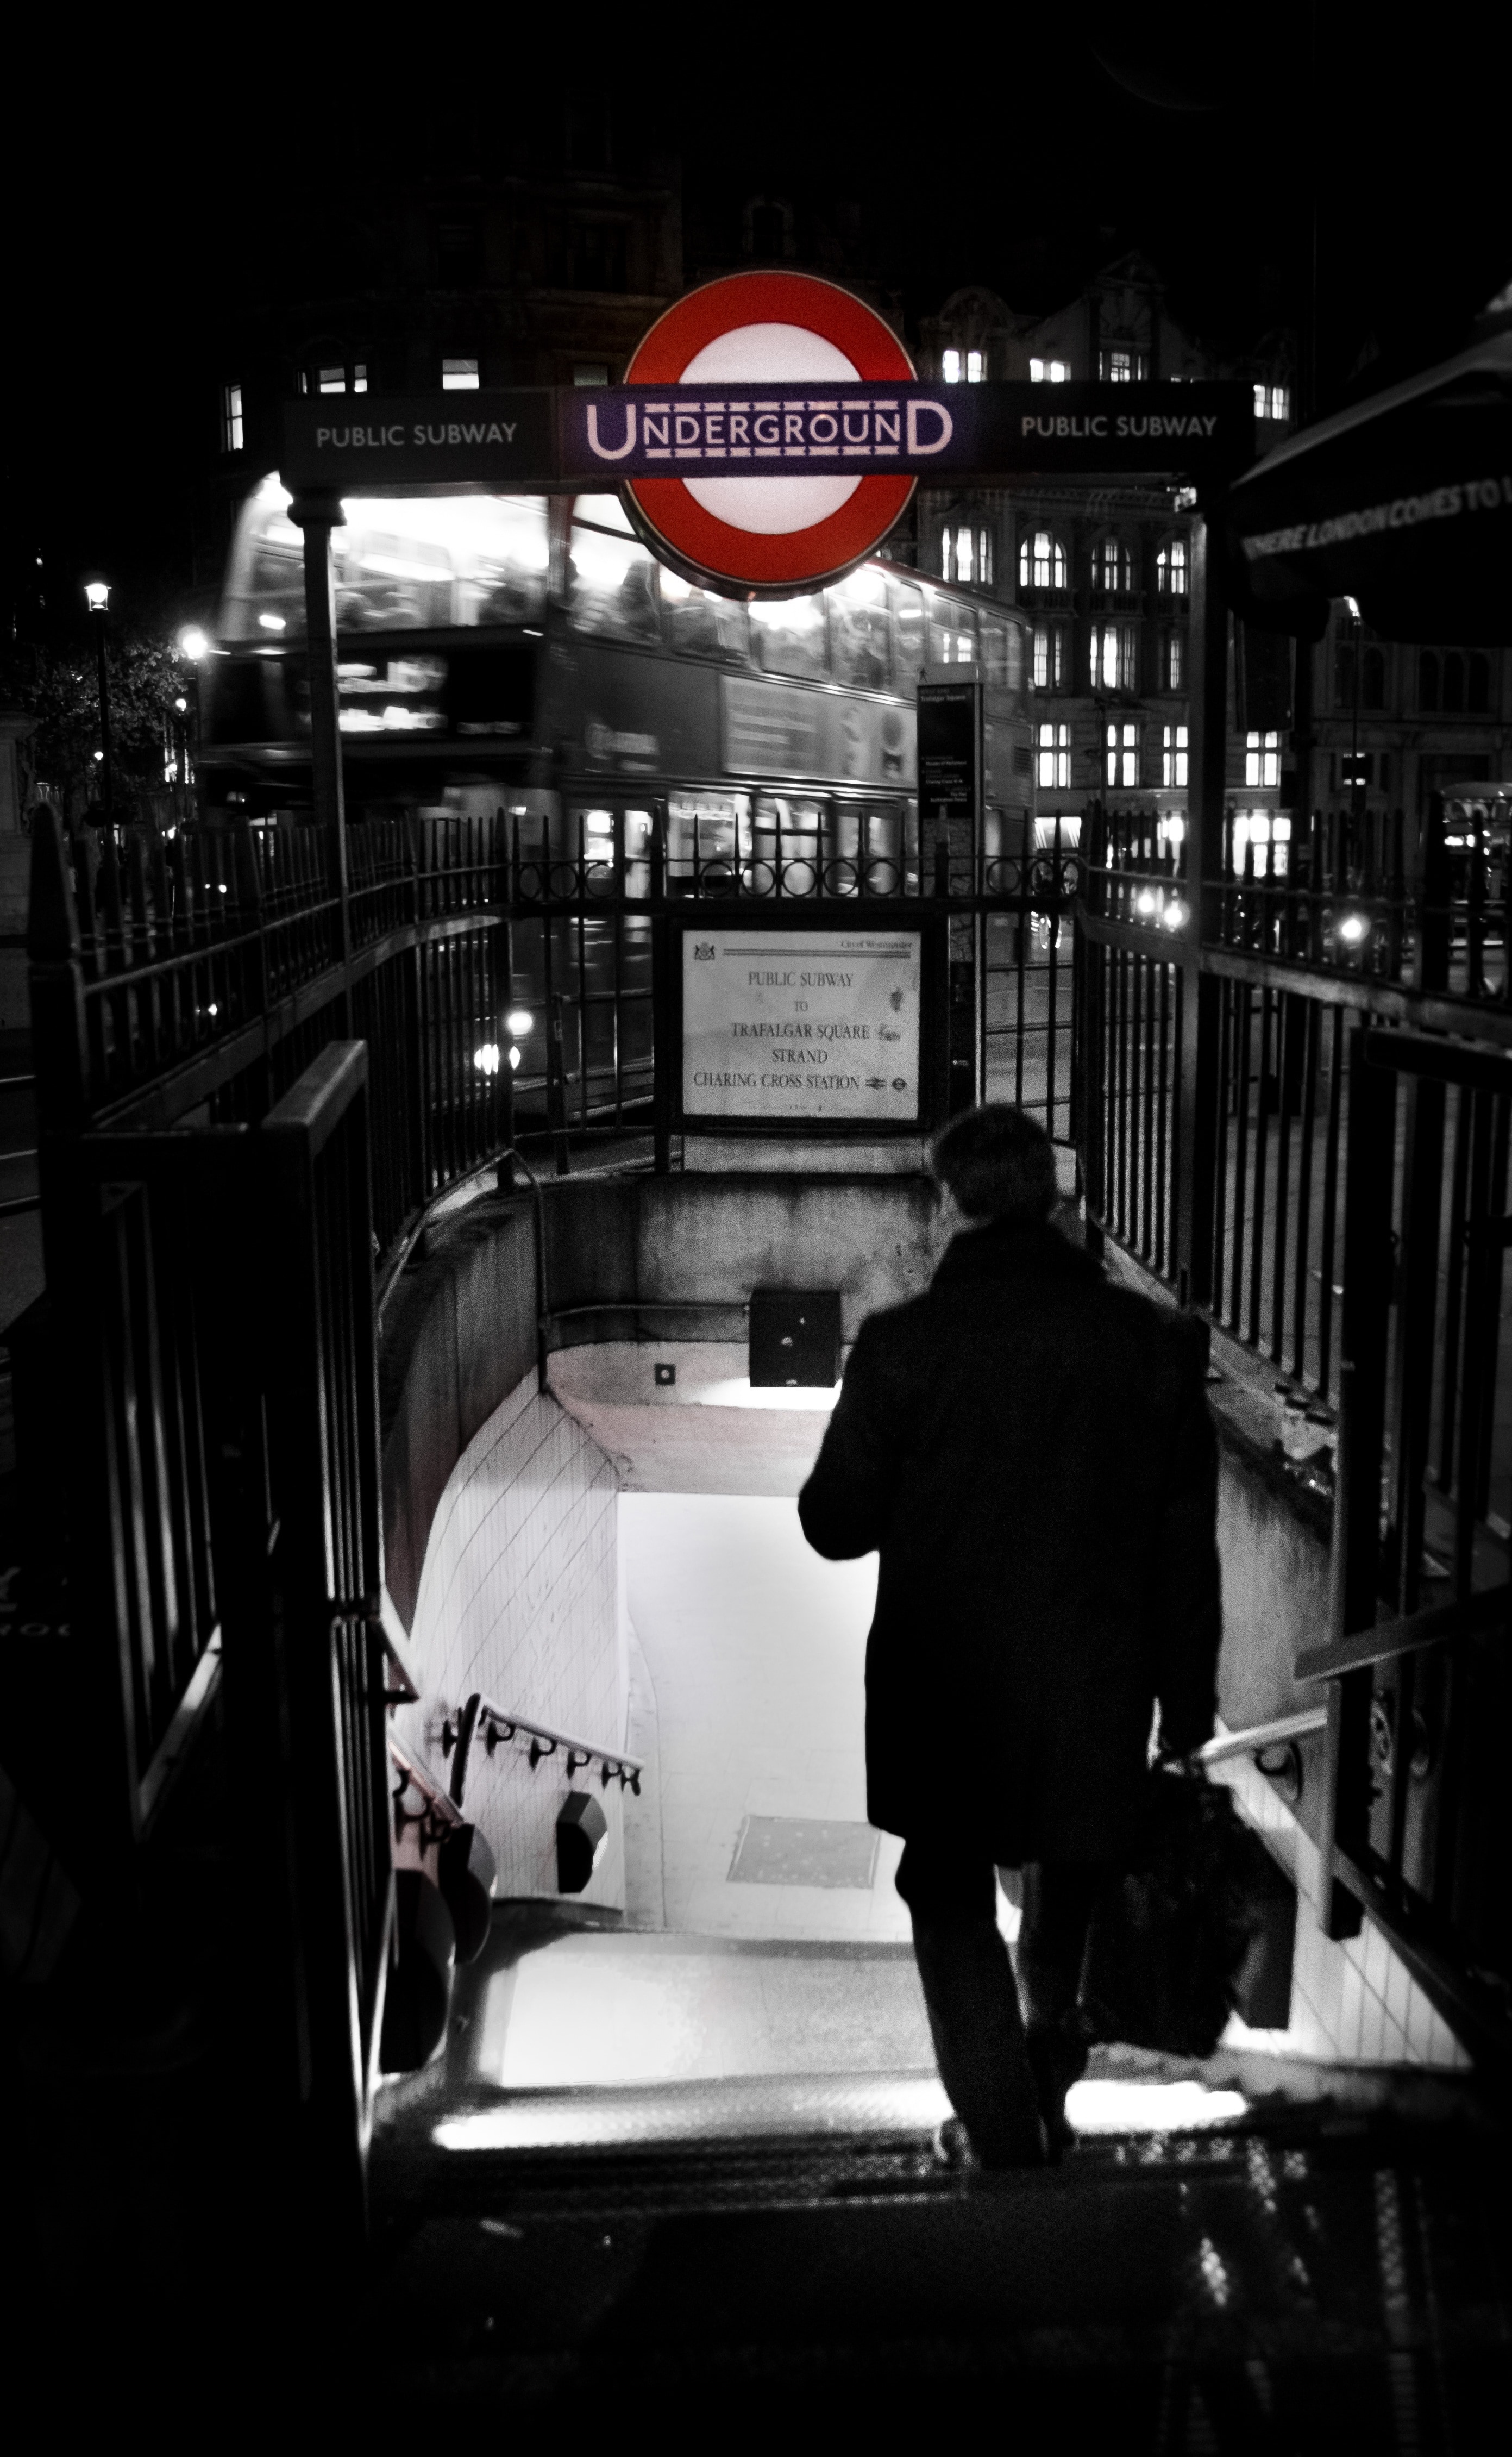 Metro, Underground, Subway, Tube, London, night, one person